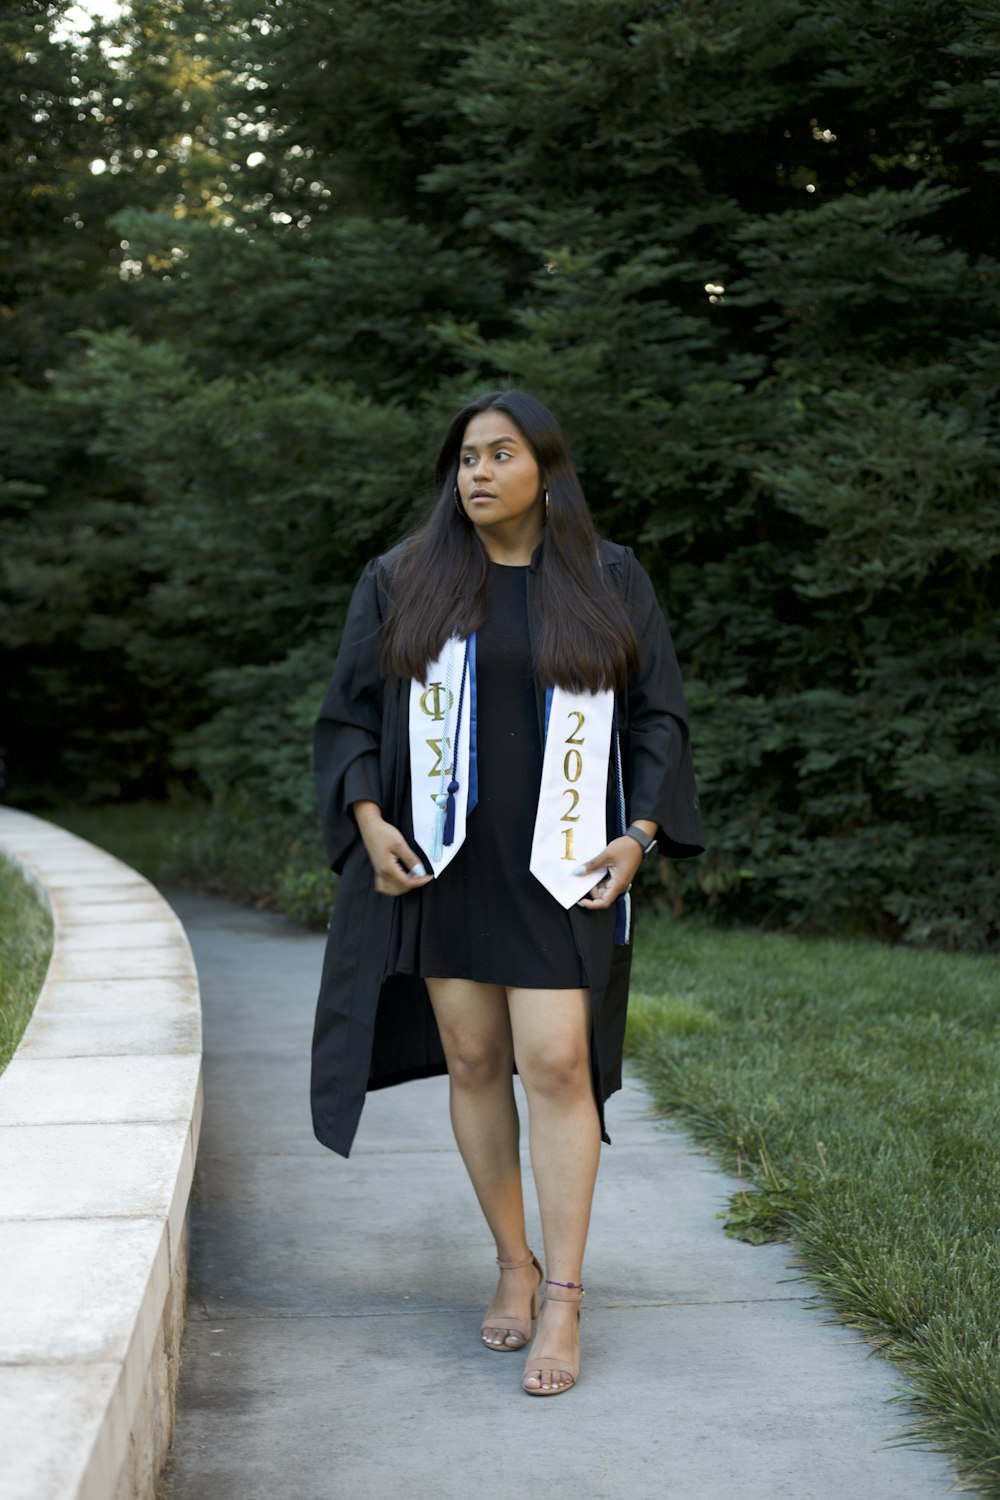 a woman in a graduation gown walking down a sidewalk